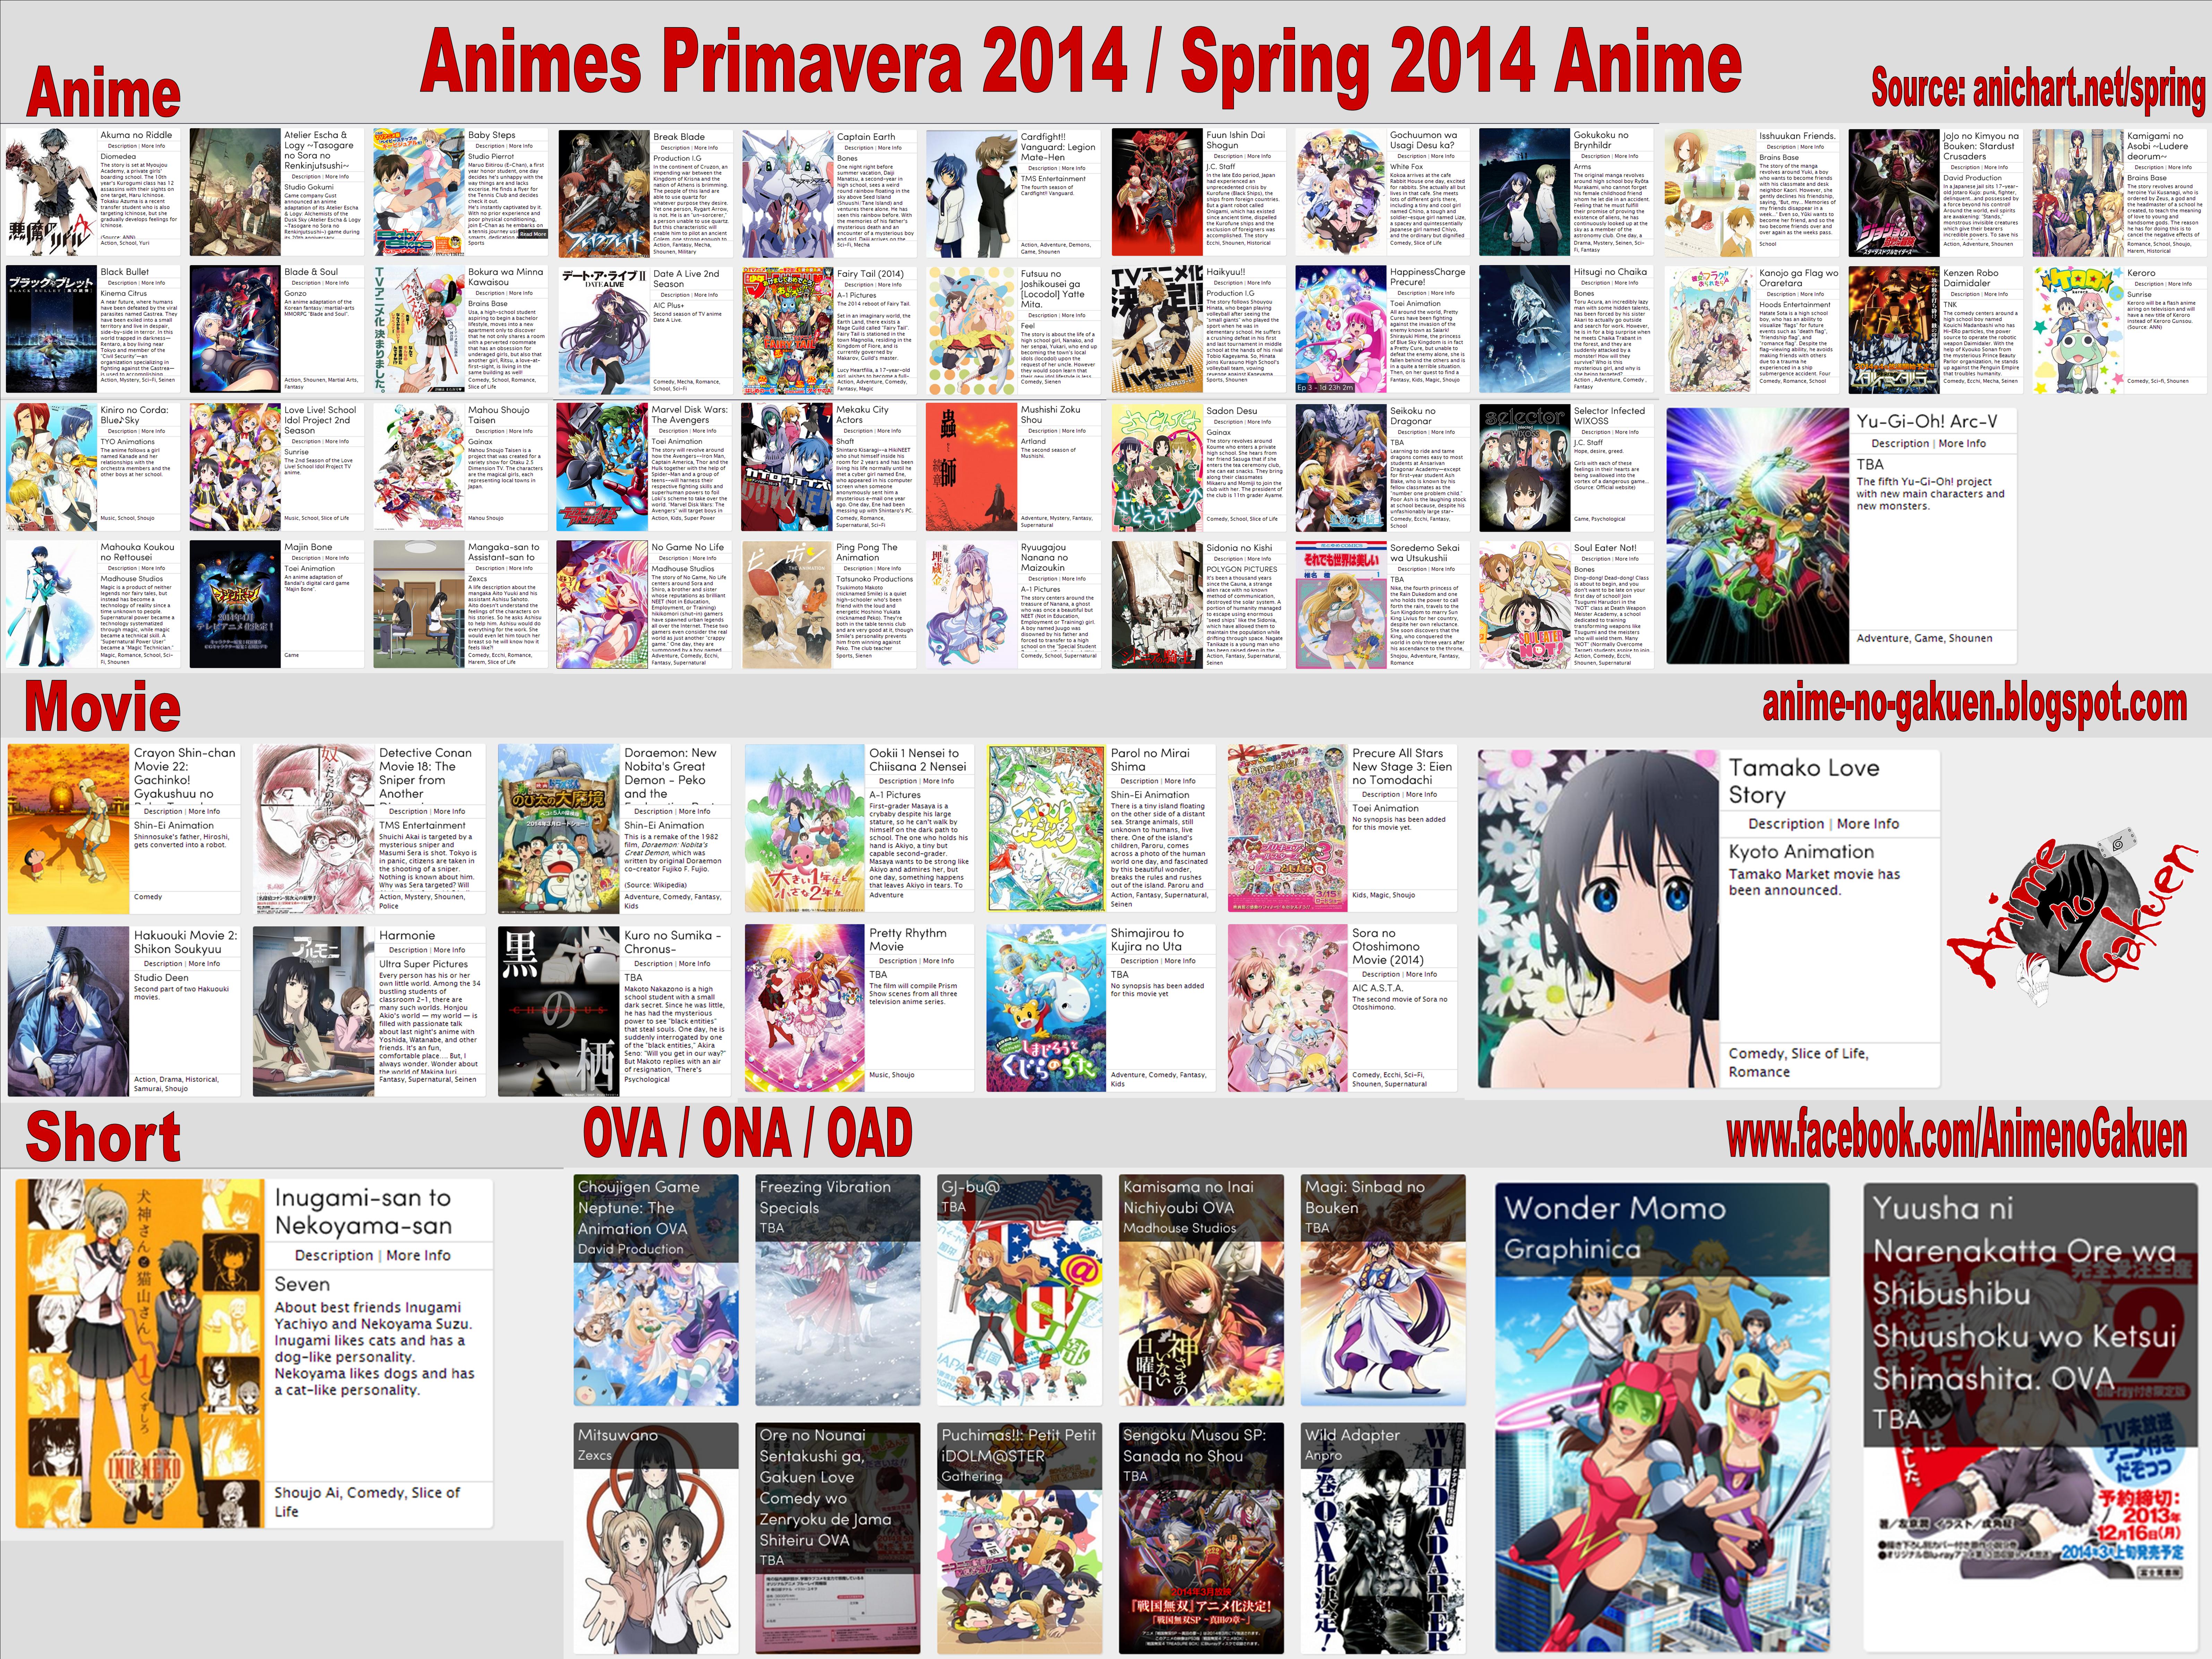 Animes de Primavera 2014Spring 2014 Anime List by brunomelanda on DeviantArt